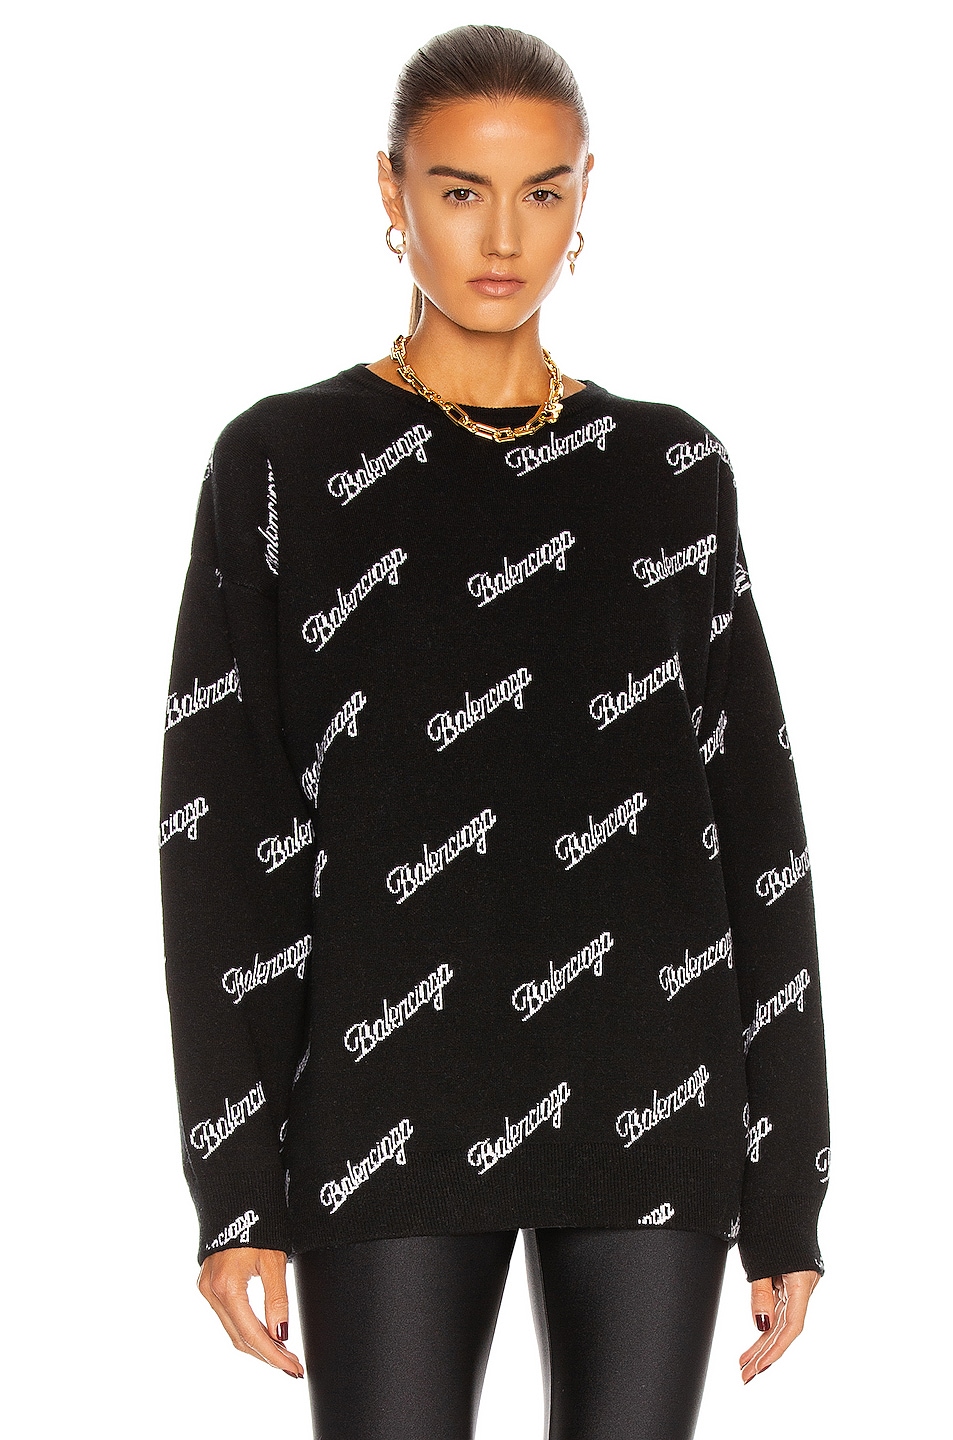 Balenciaga Long Sleeve Logo Crewneck Sweater in Black & White | FWRD